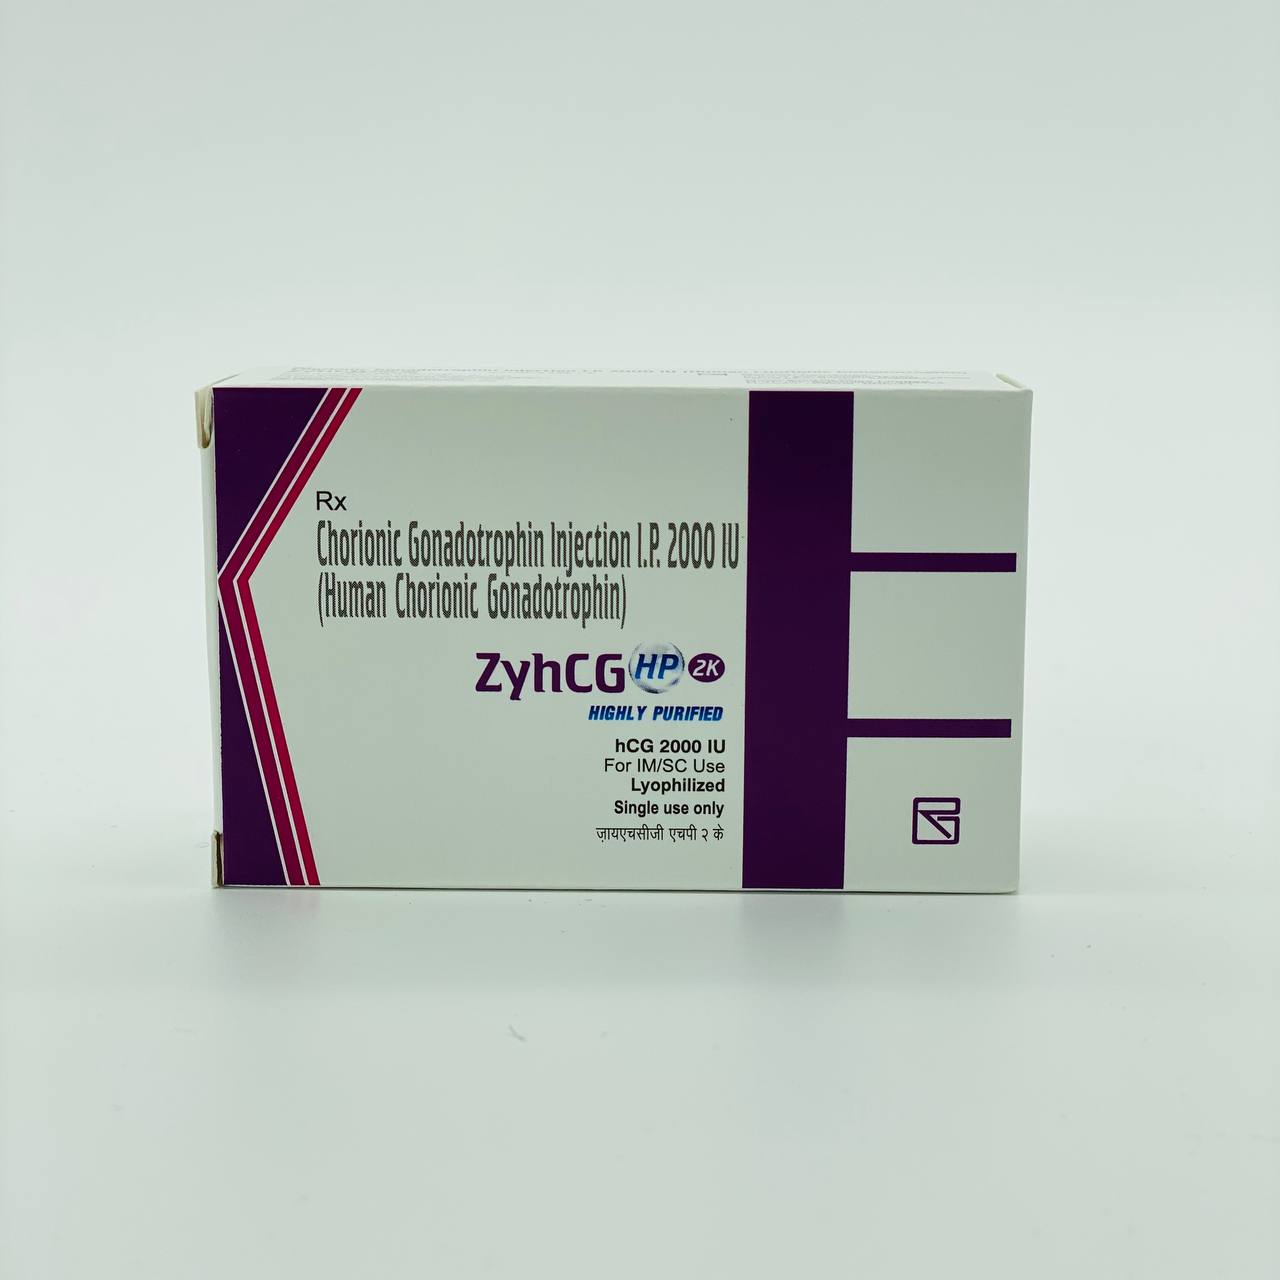 Chorionic Gonadotropin Injection I.P. 2000 IU ZyhCg